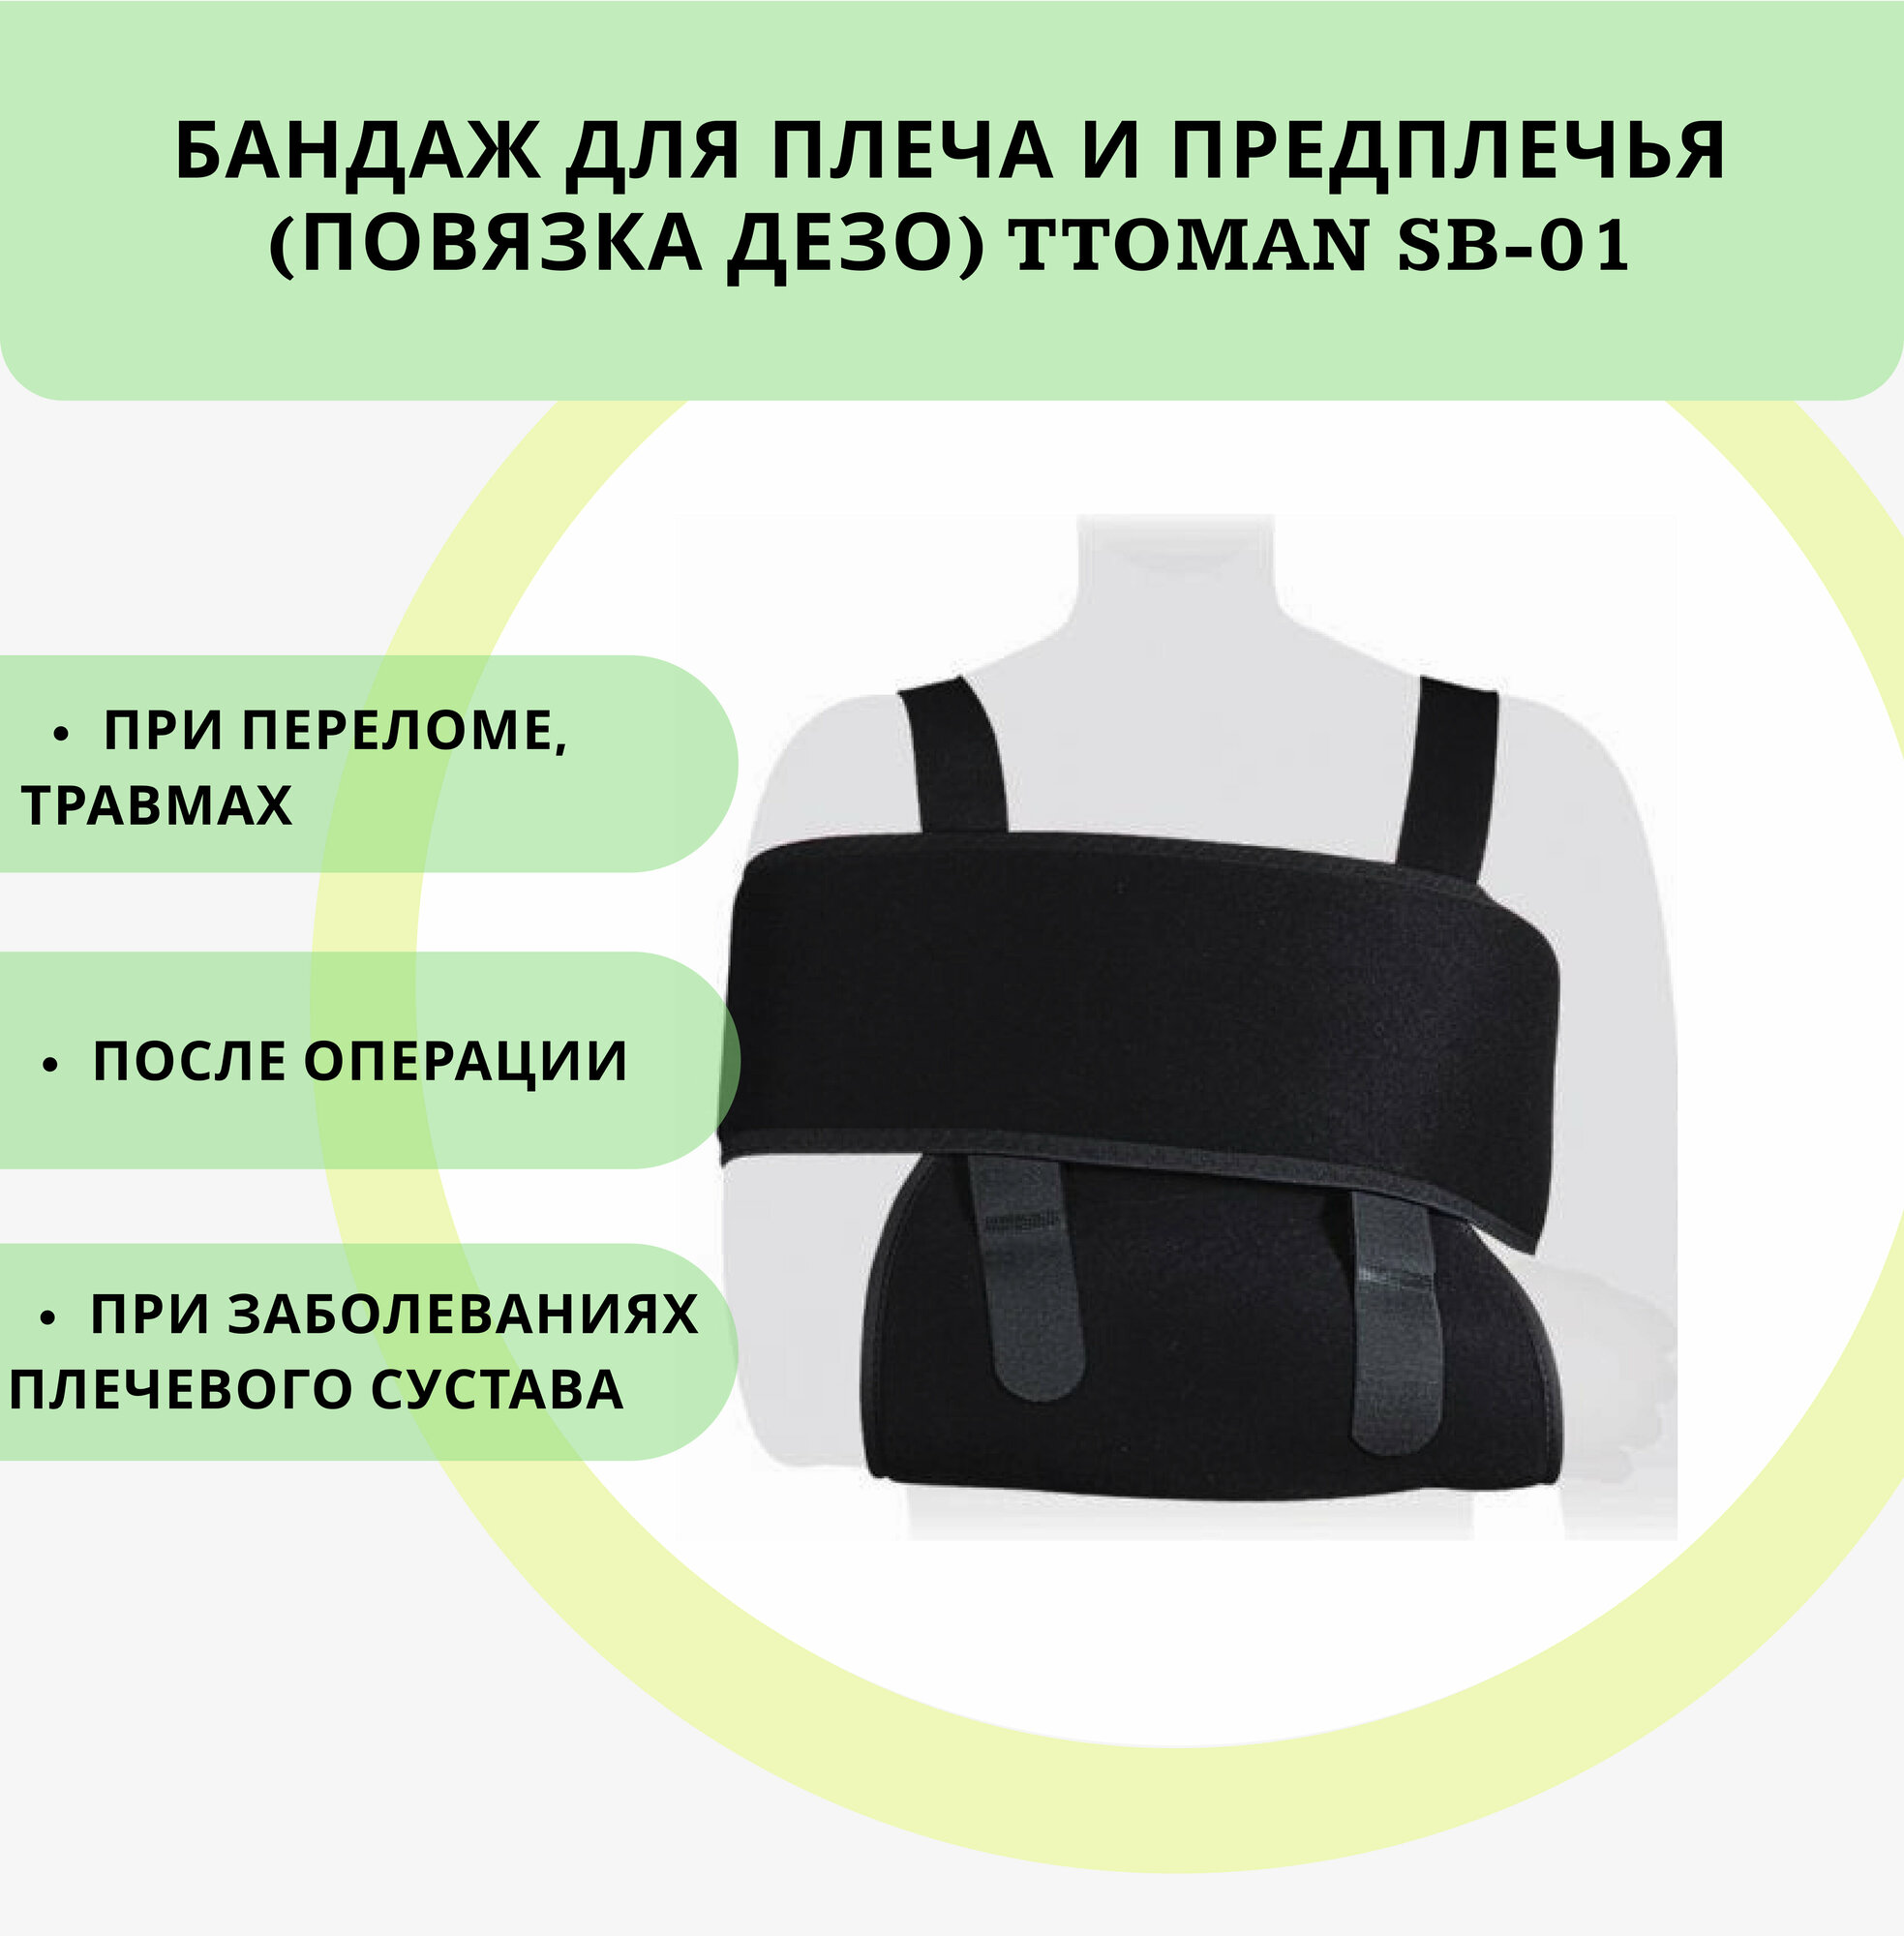 Бандаж для плеча и предплечья (повязка дезо) Ttoman SB-01, размер S